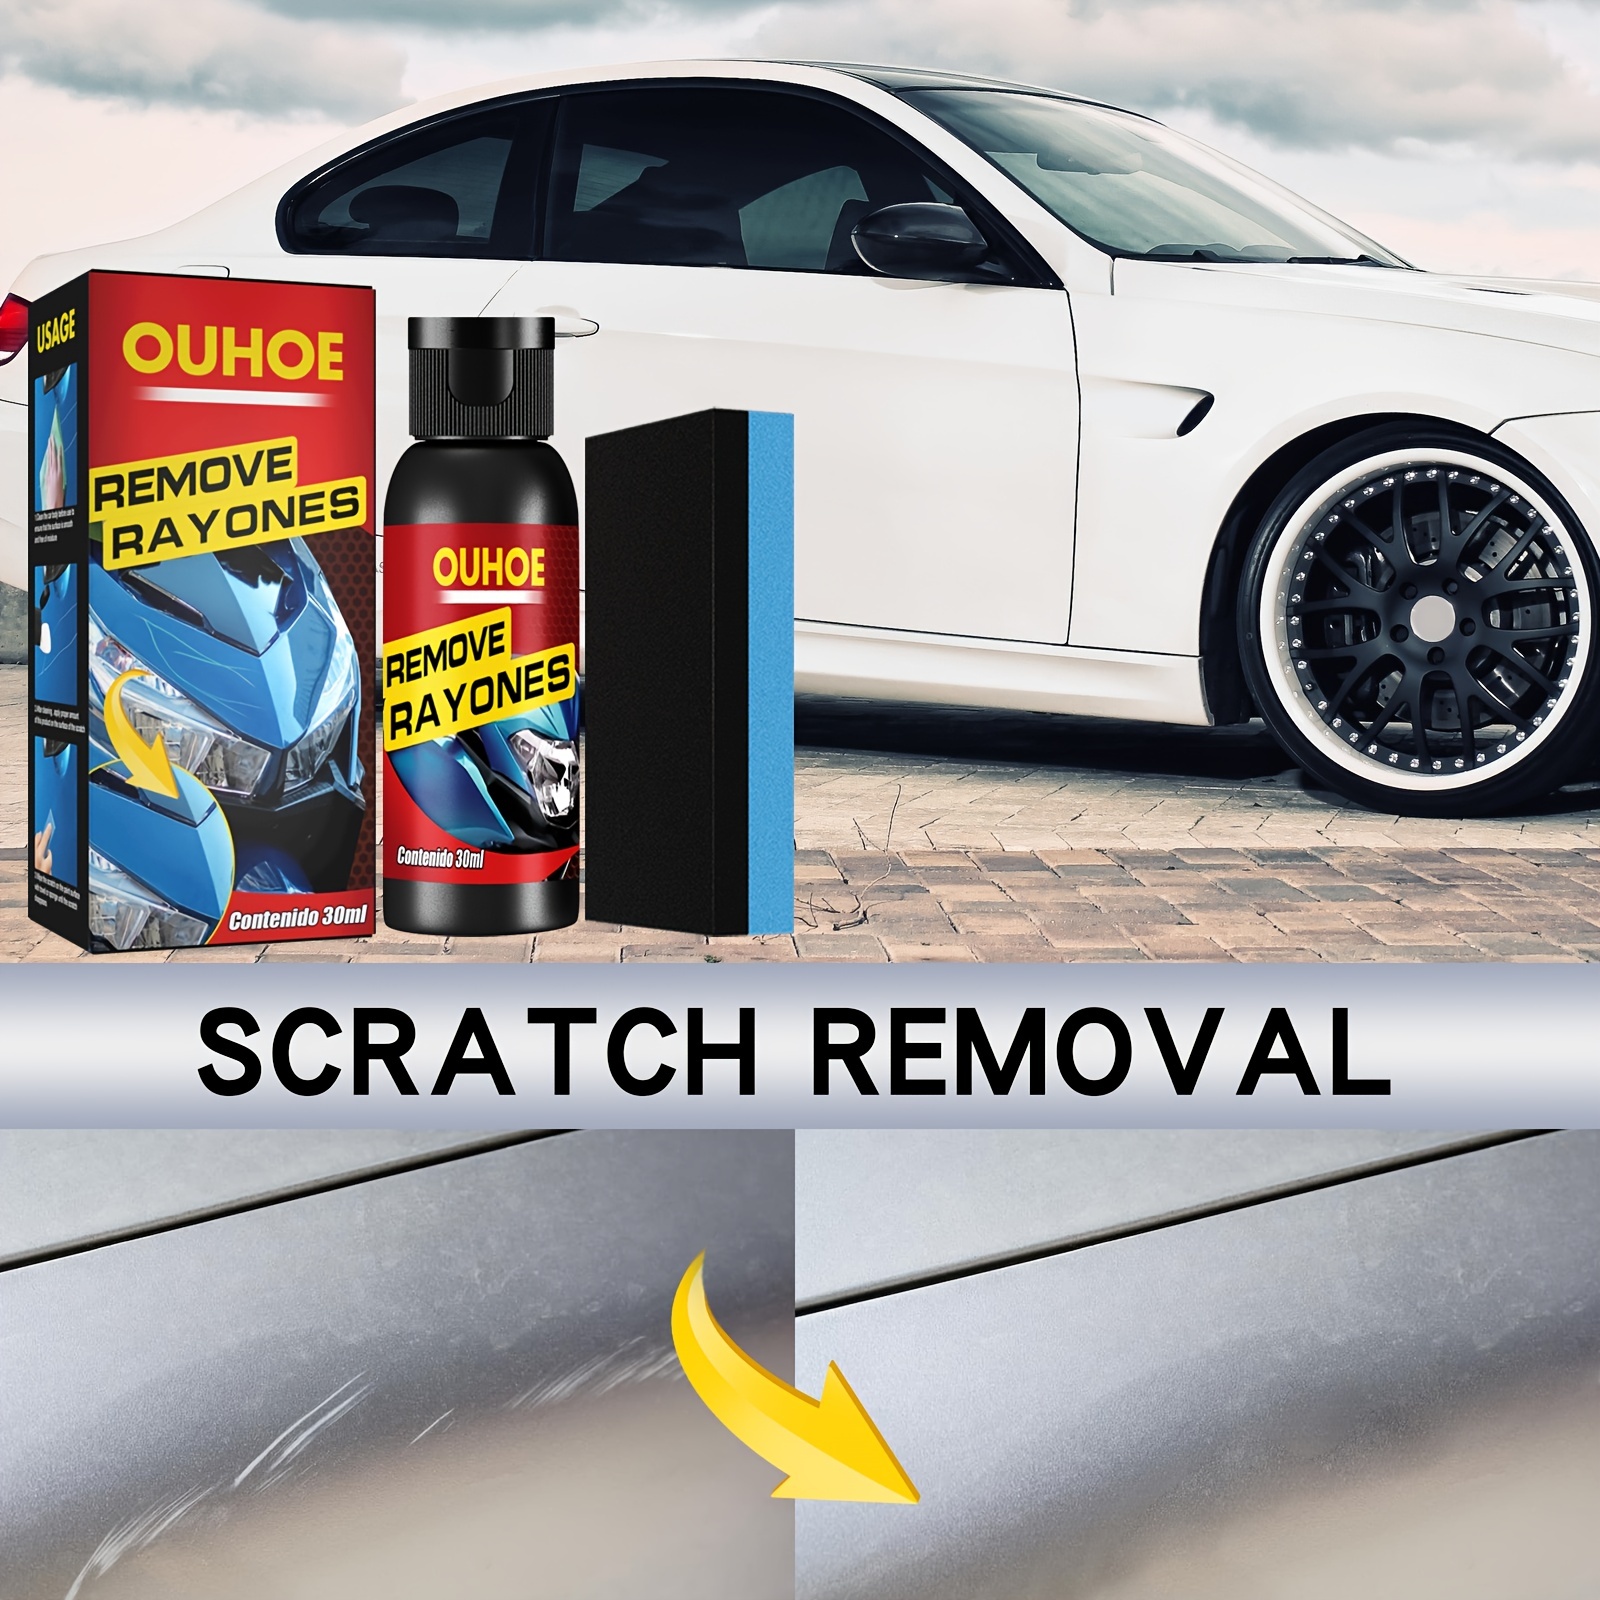 Car Paint Scratch Repair Wax Polishing Kit Scratch Repair Agent Paint Care  30ml